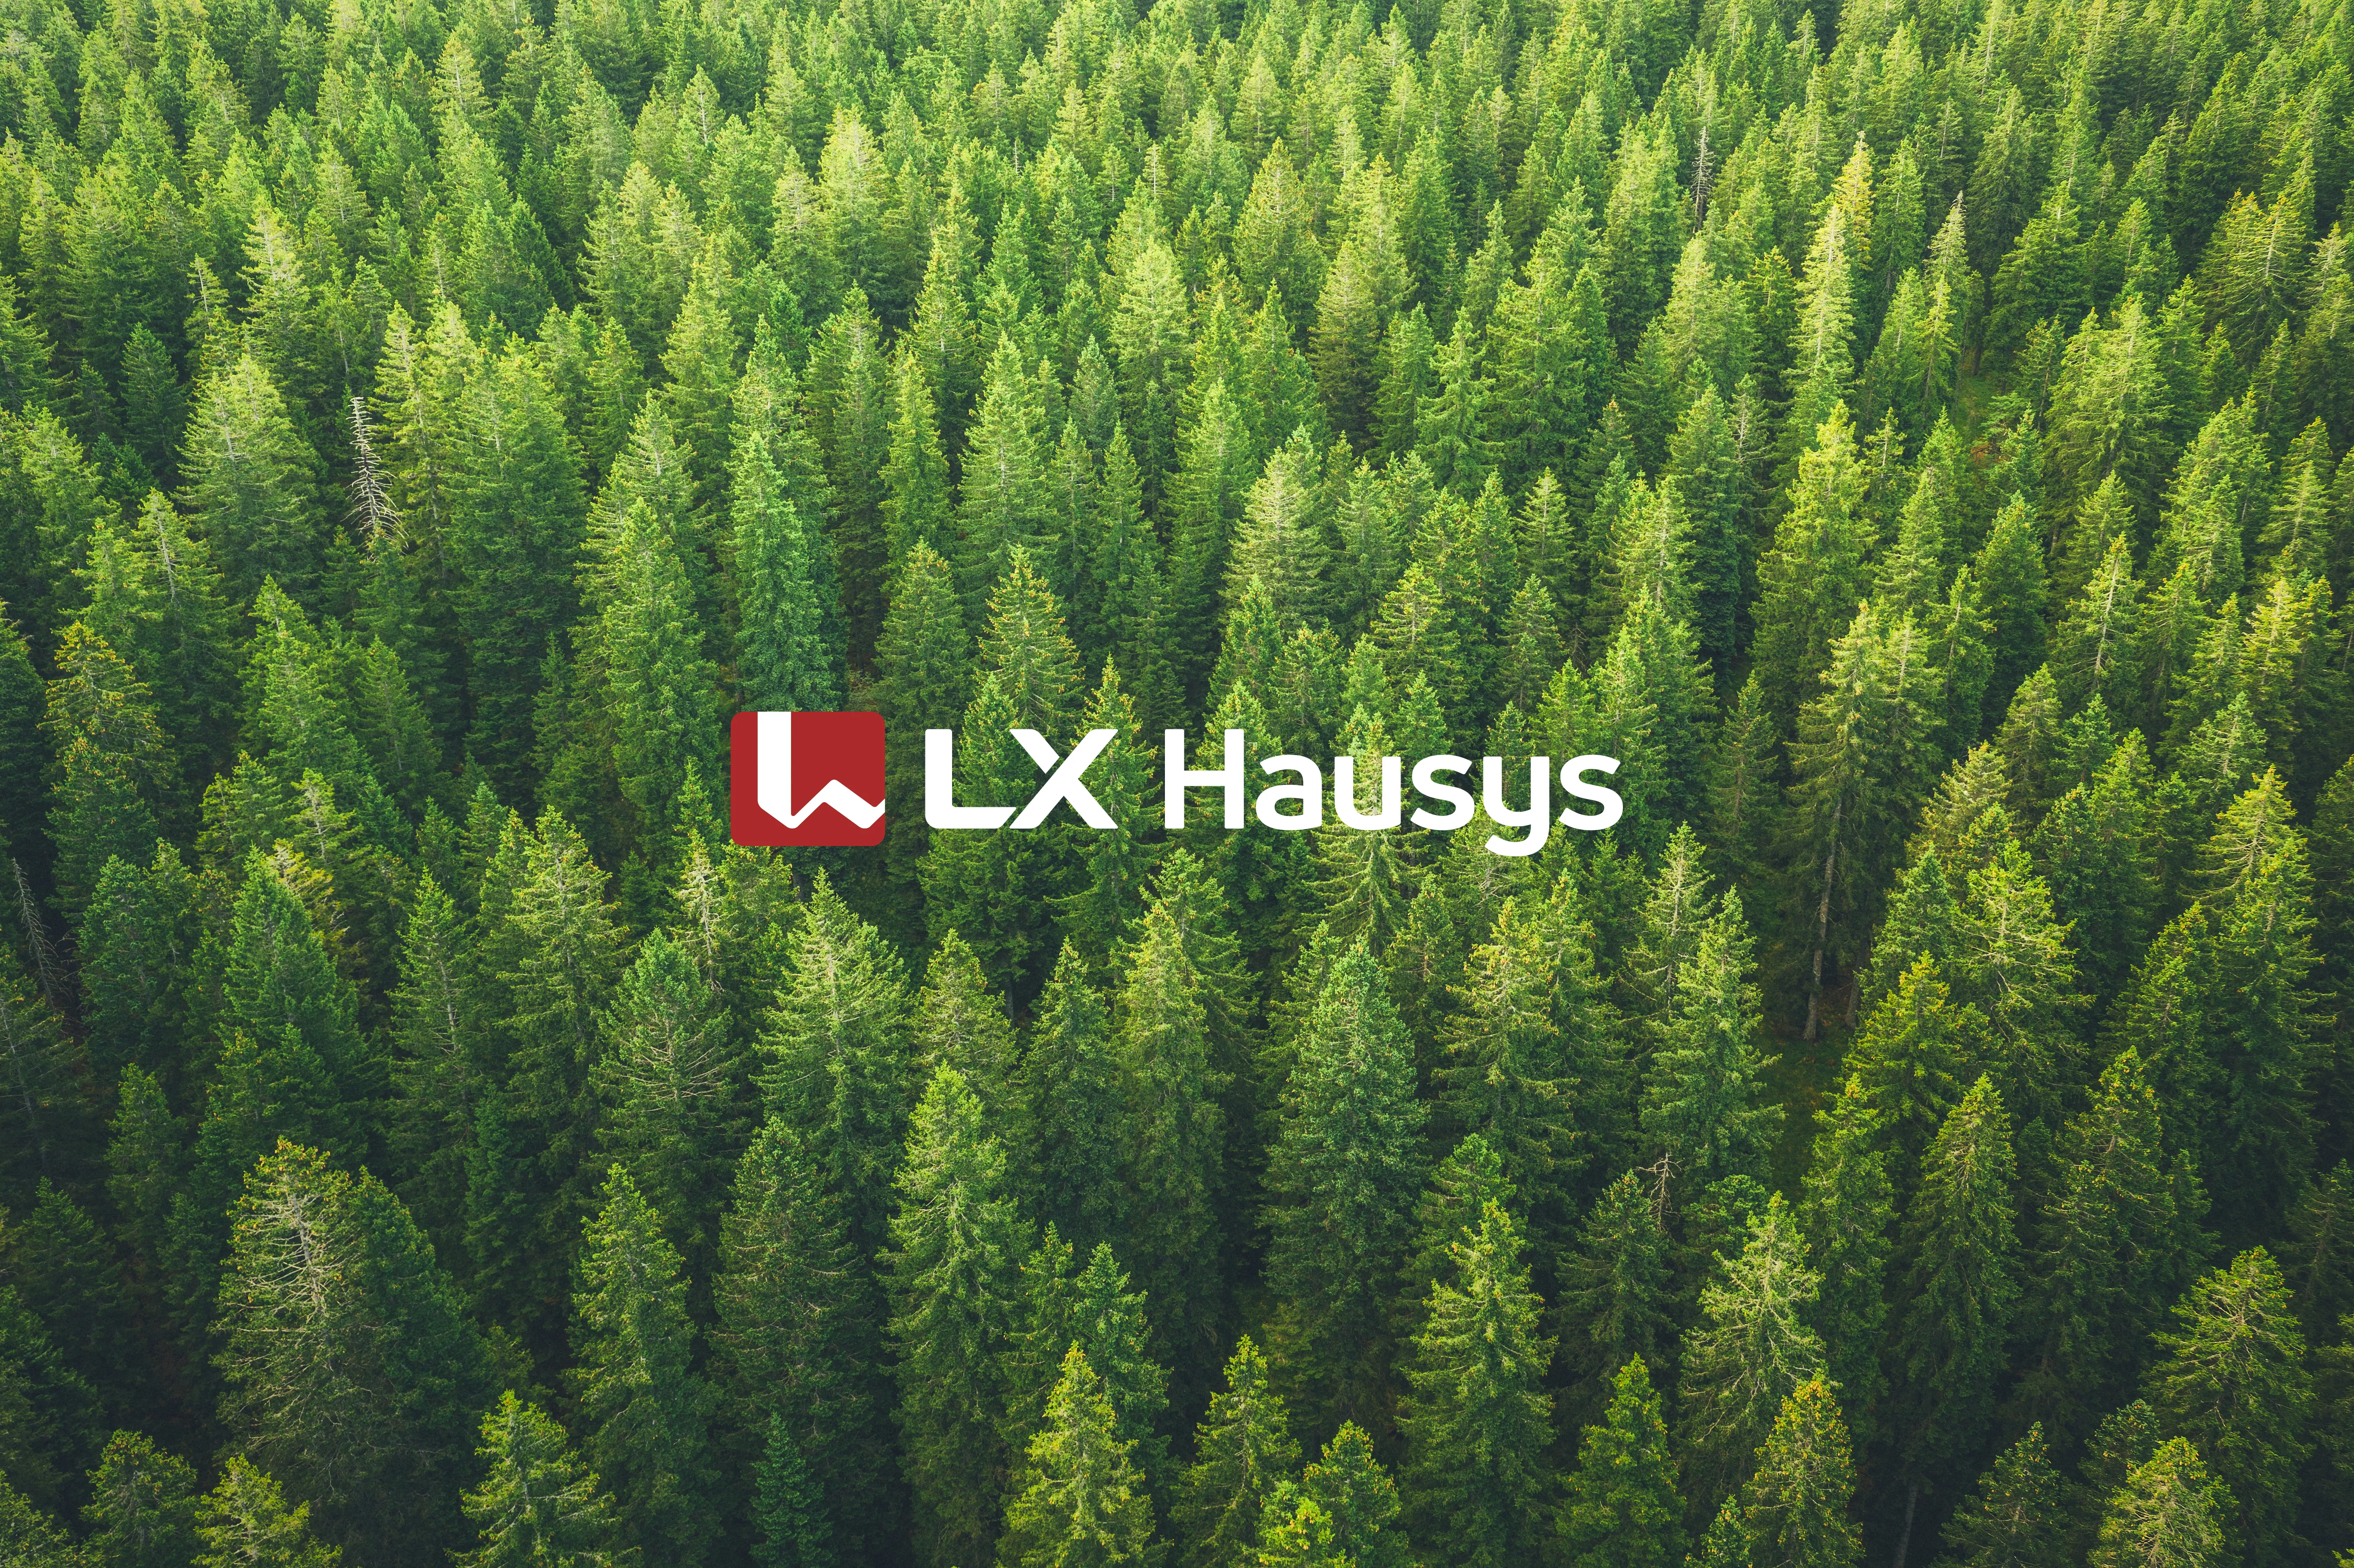 LG Hausys announces its new name: LX Hausys